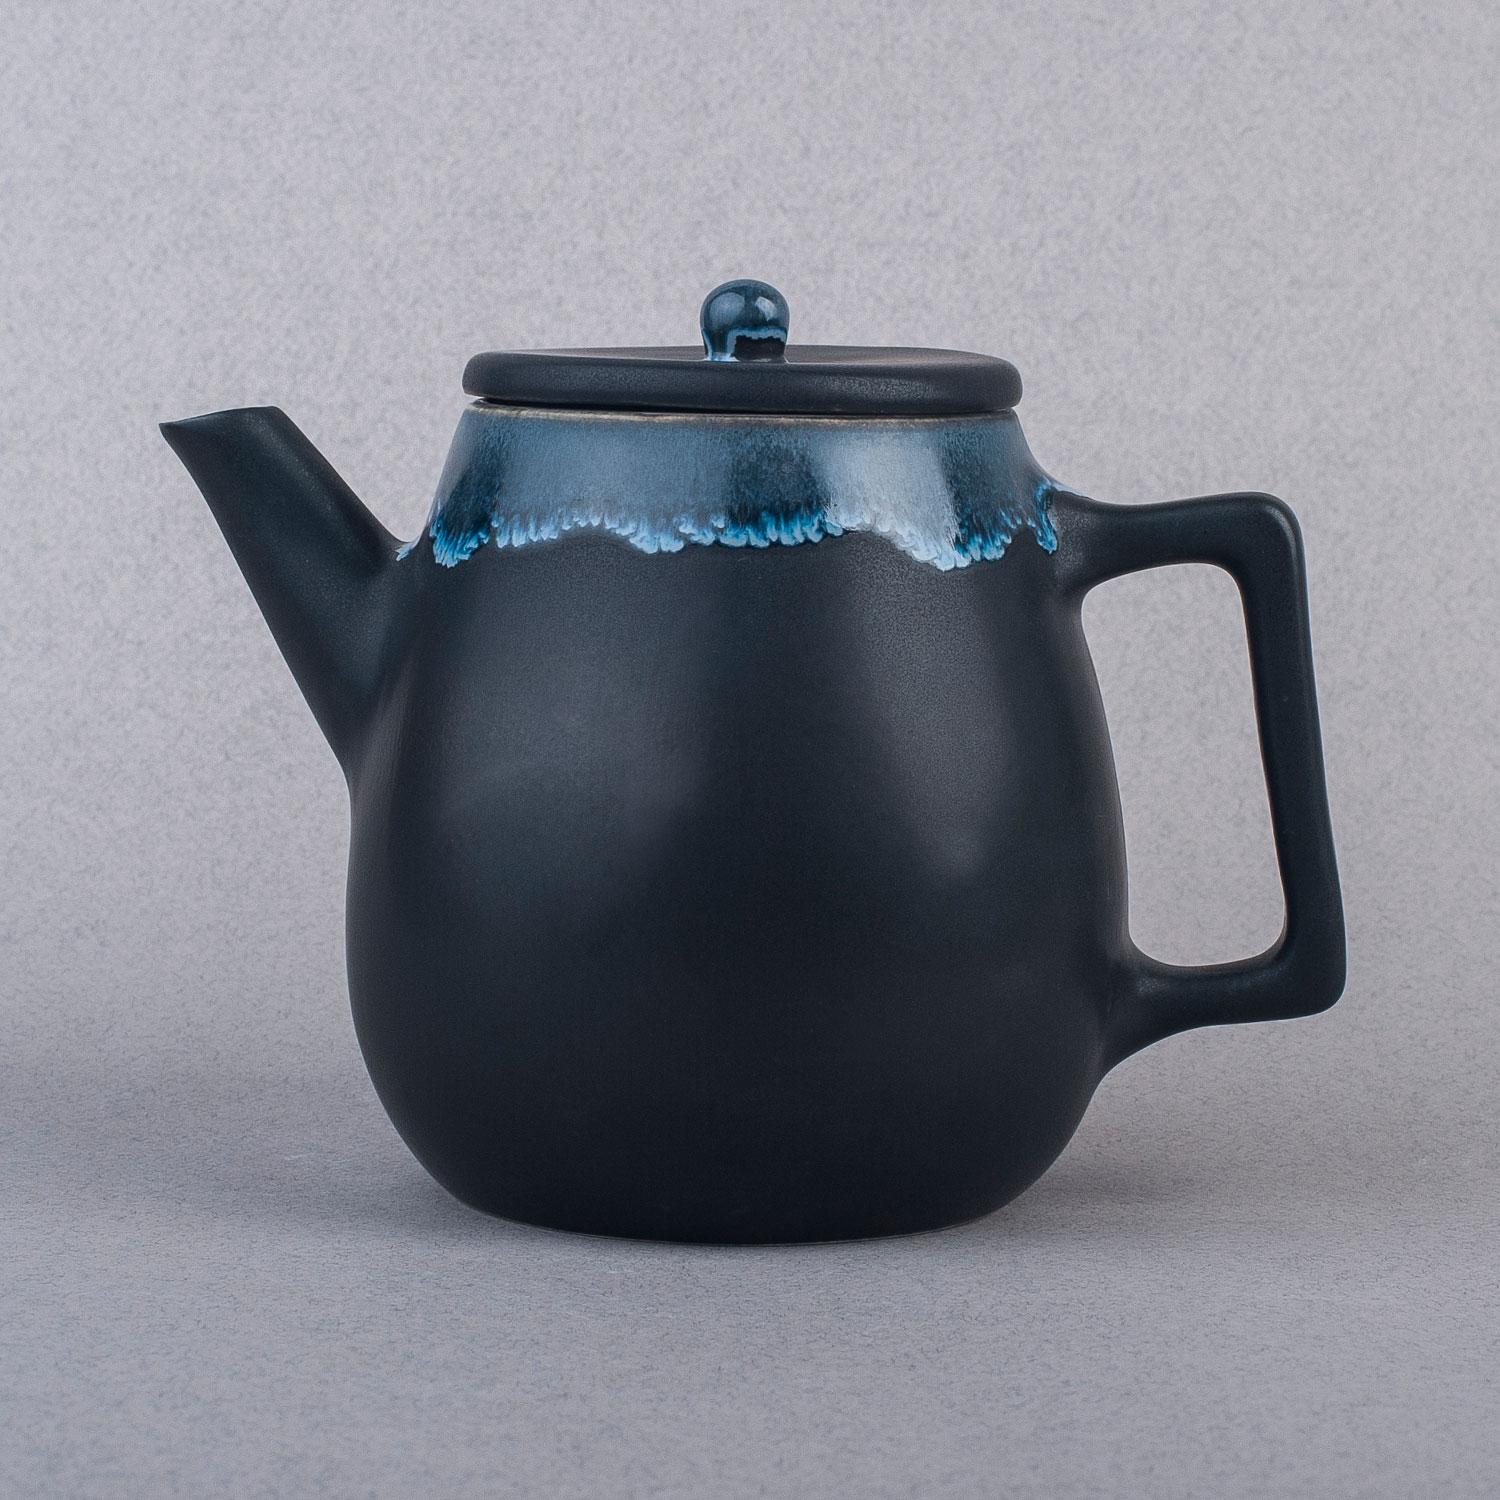 Blueberry teapot